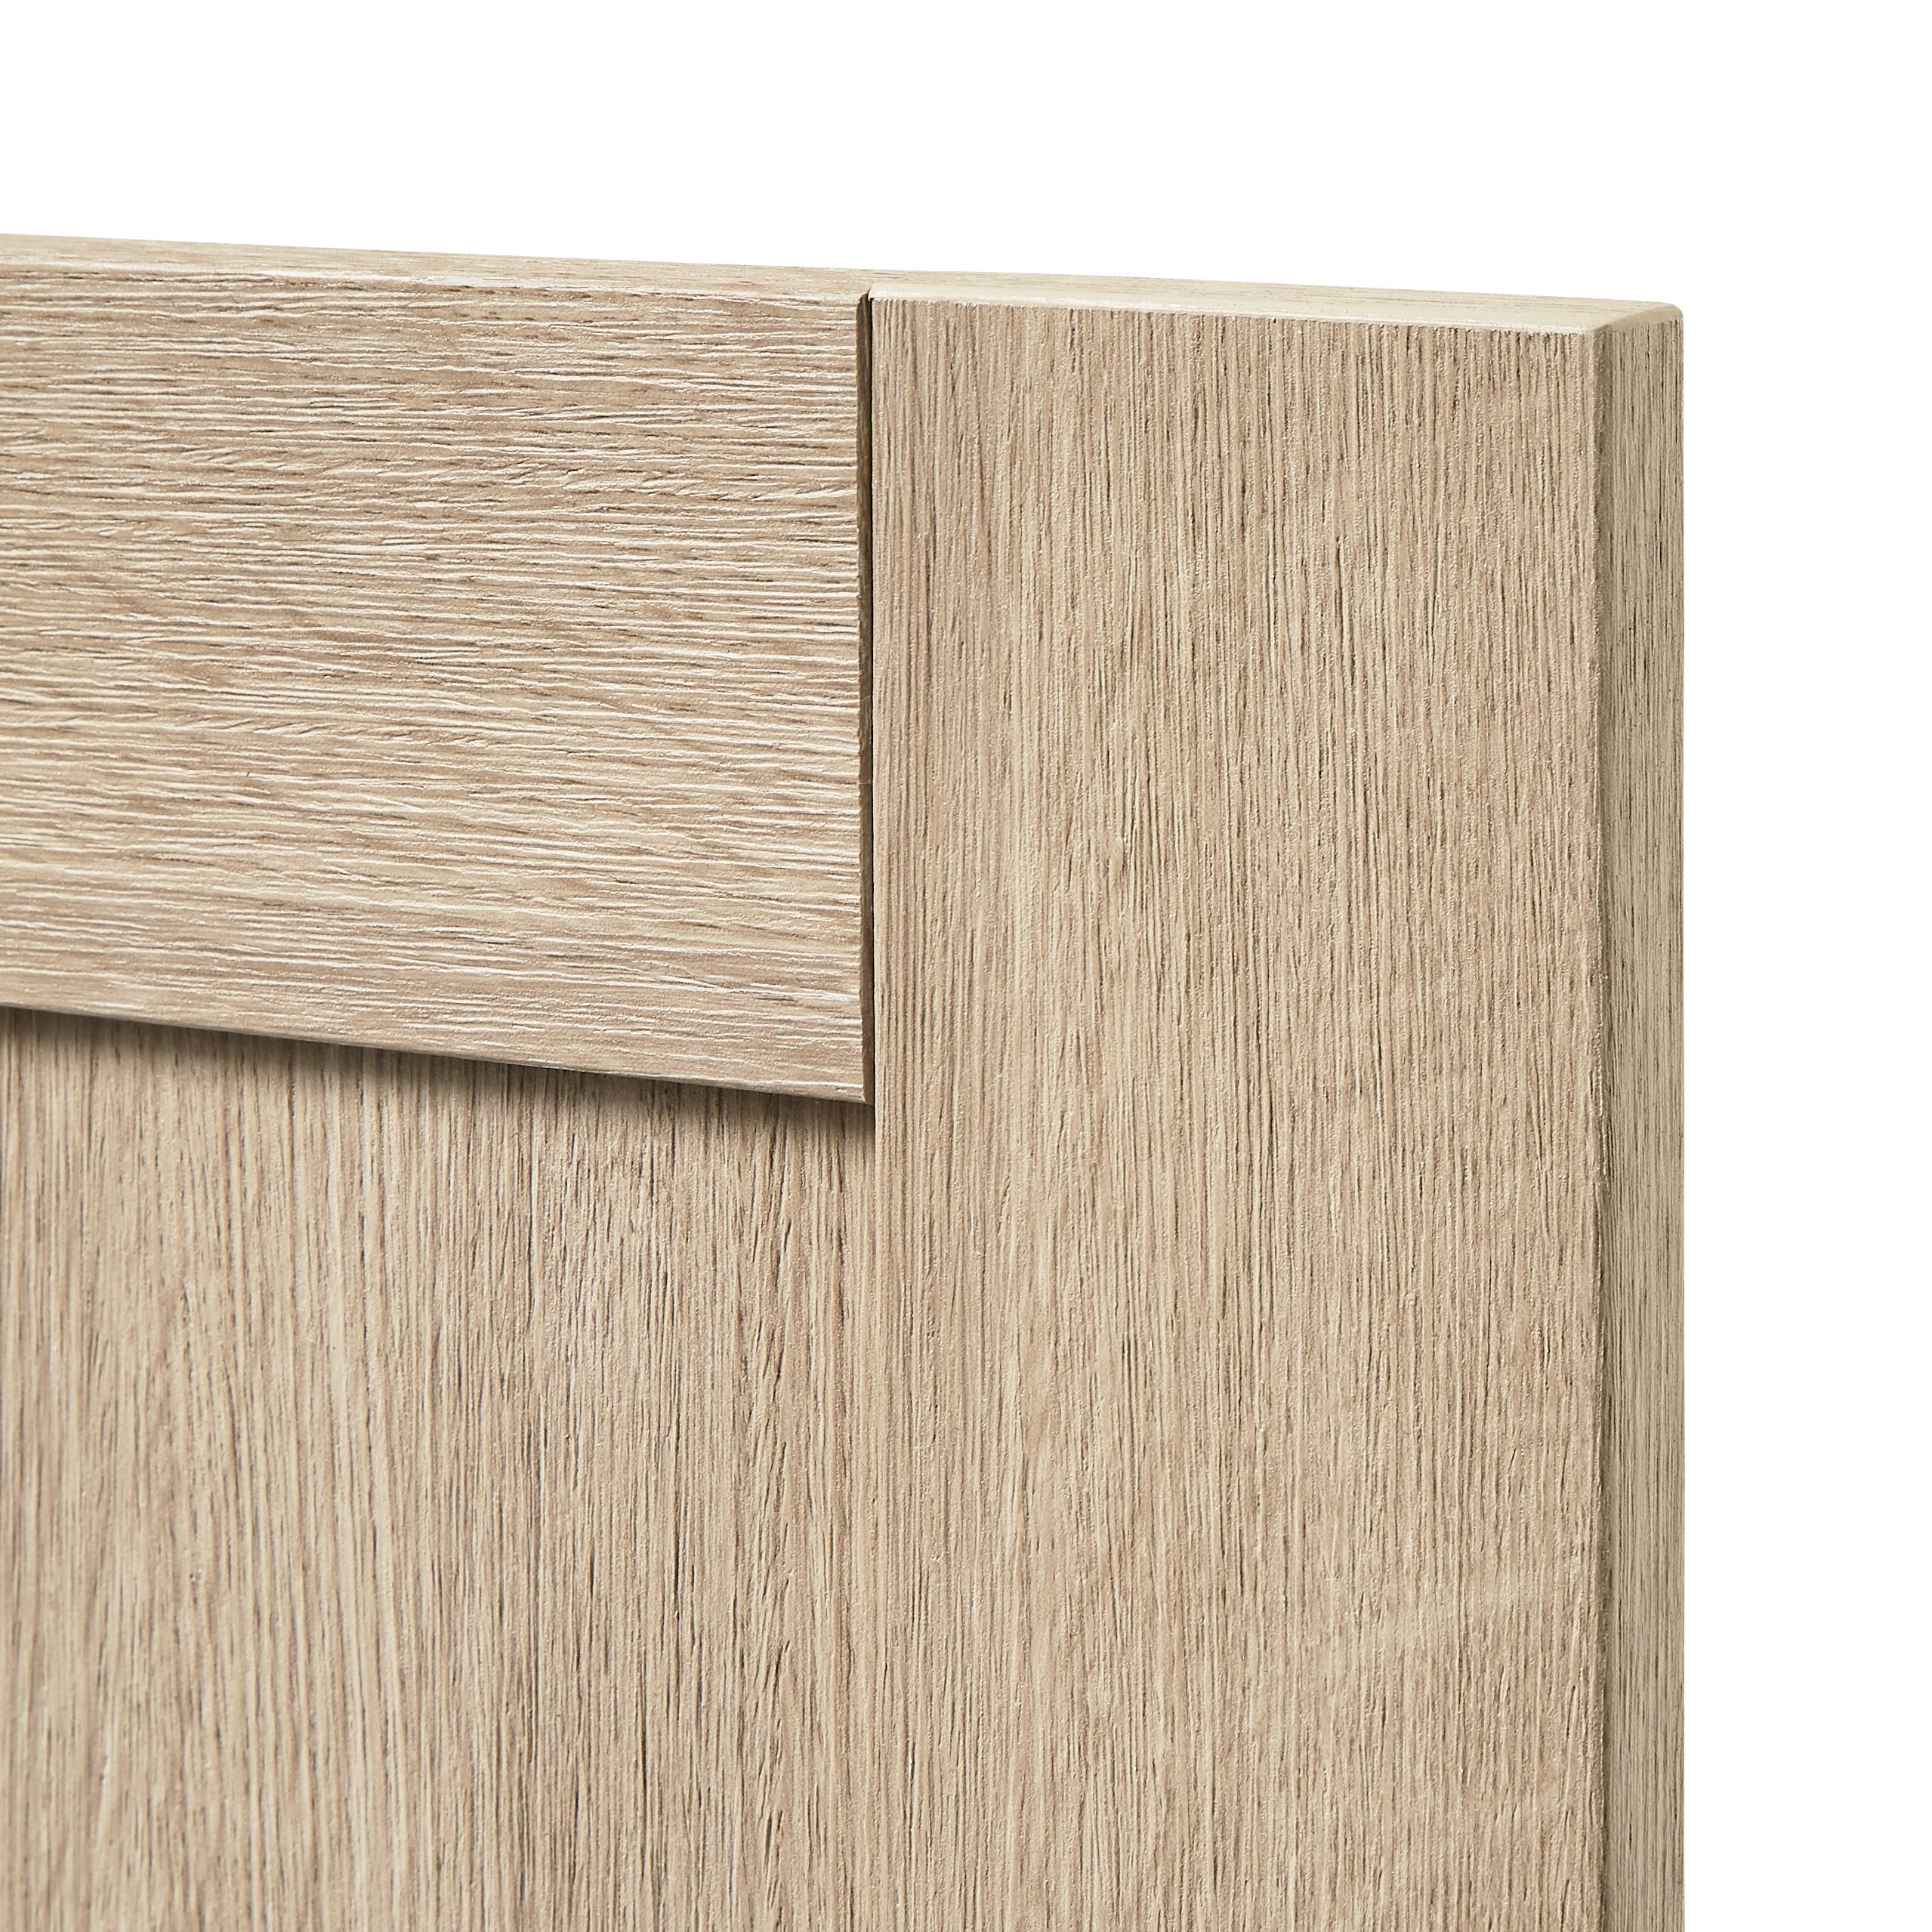 GoodHome Alpinia Oak effect shaker Tall wall Cabinet door (W)500mm (H)895mm (T)18mm